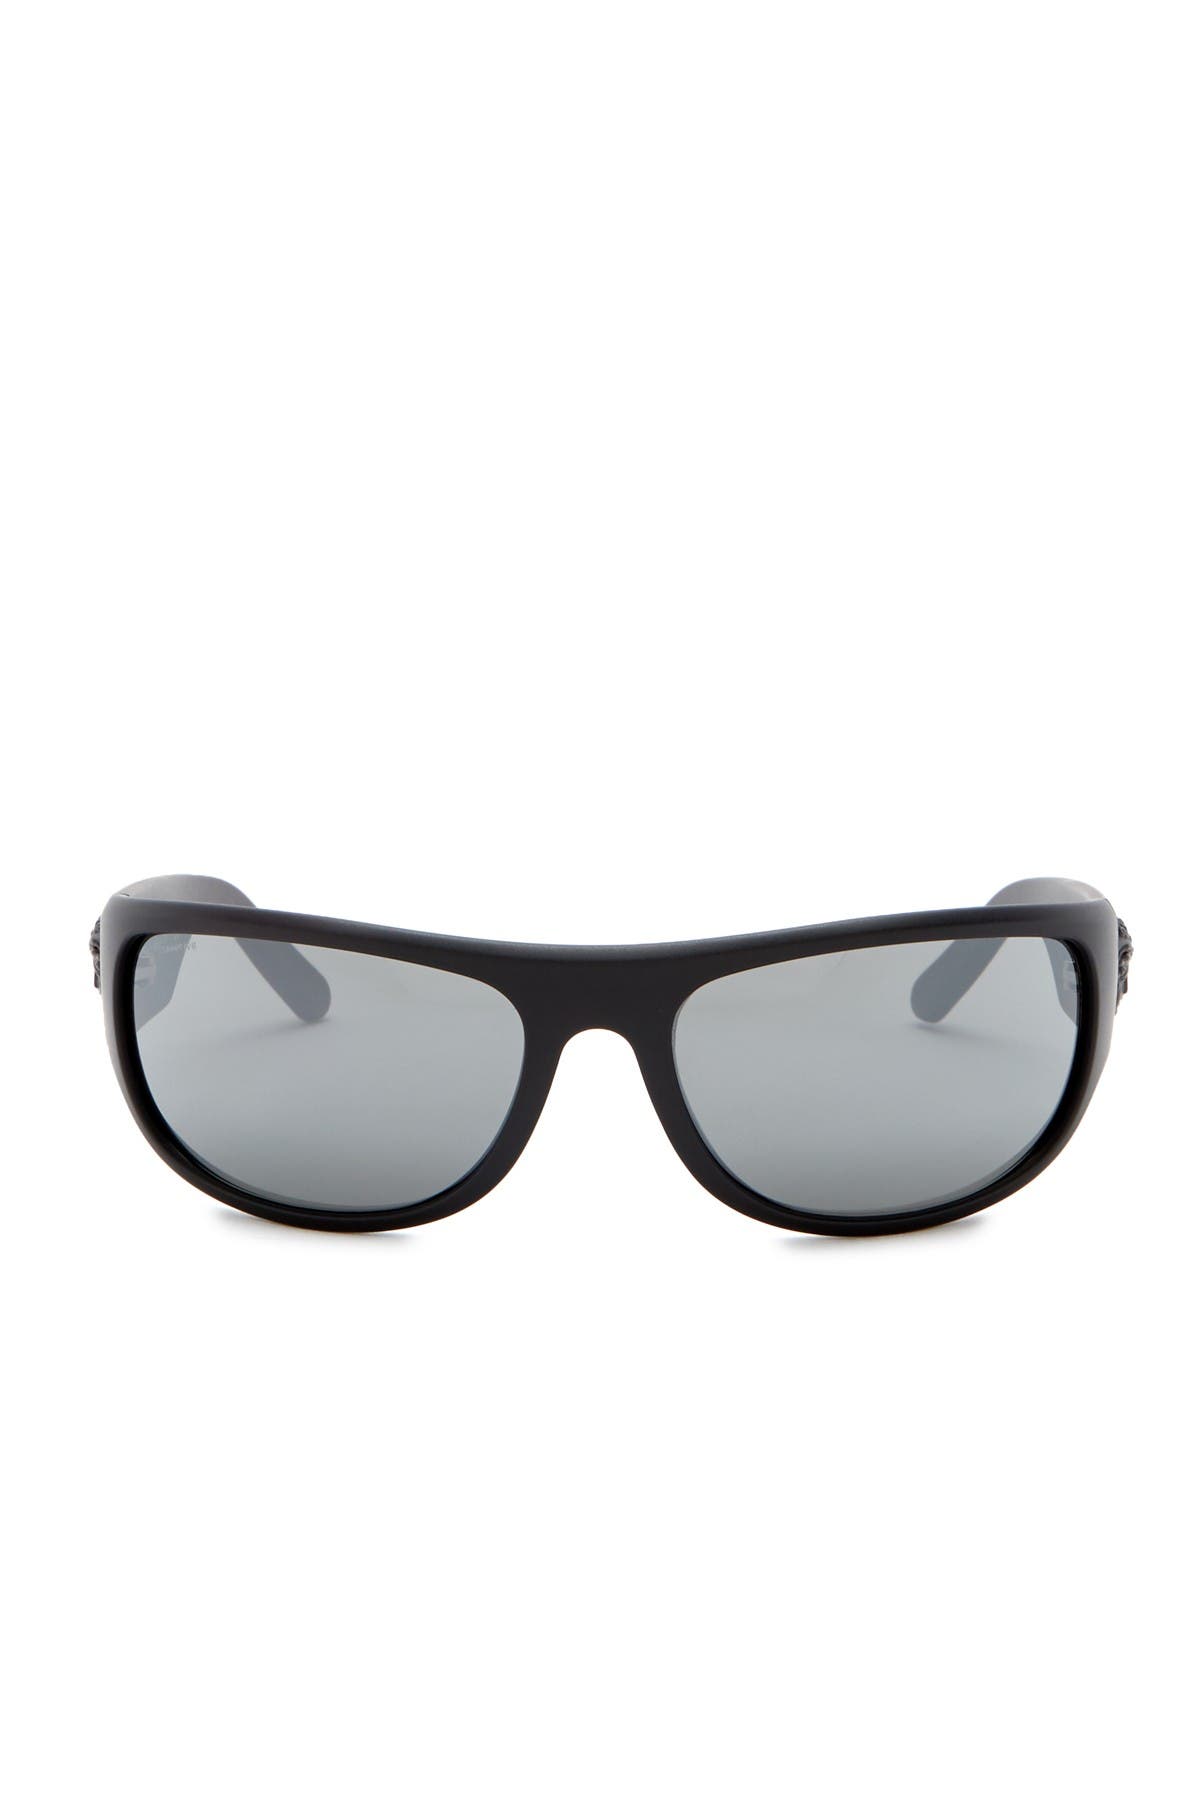 versace rectangle 63mm sunglasses